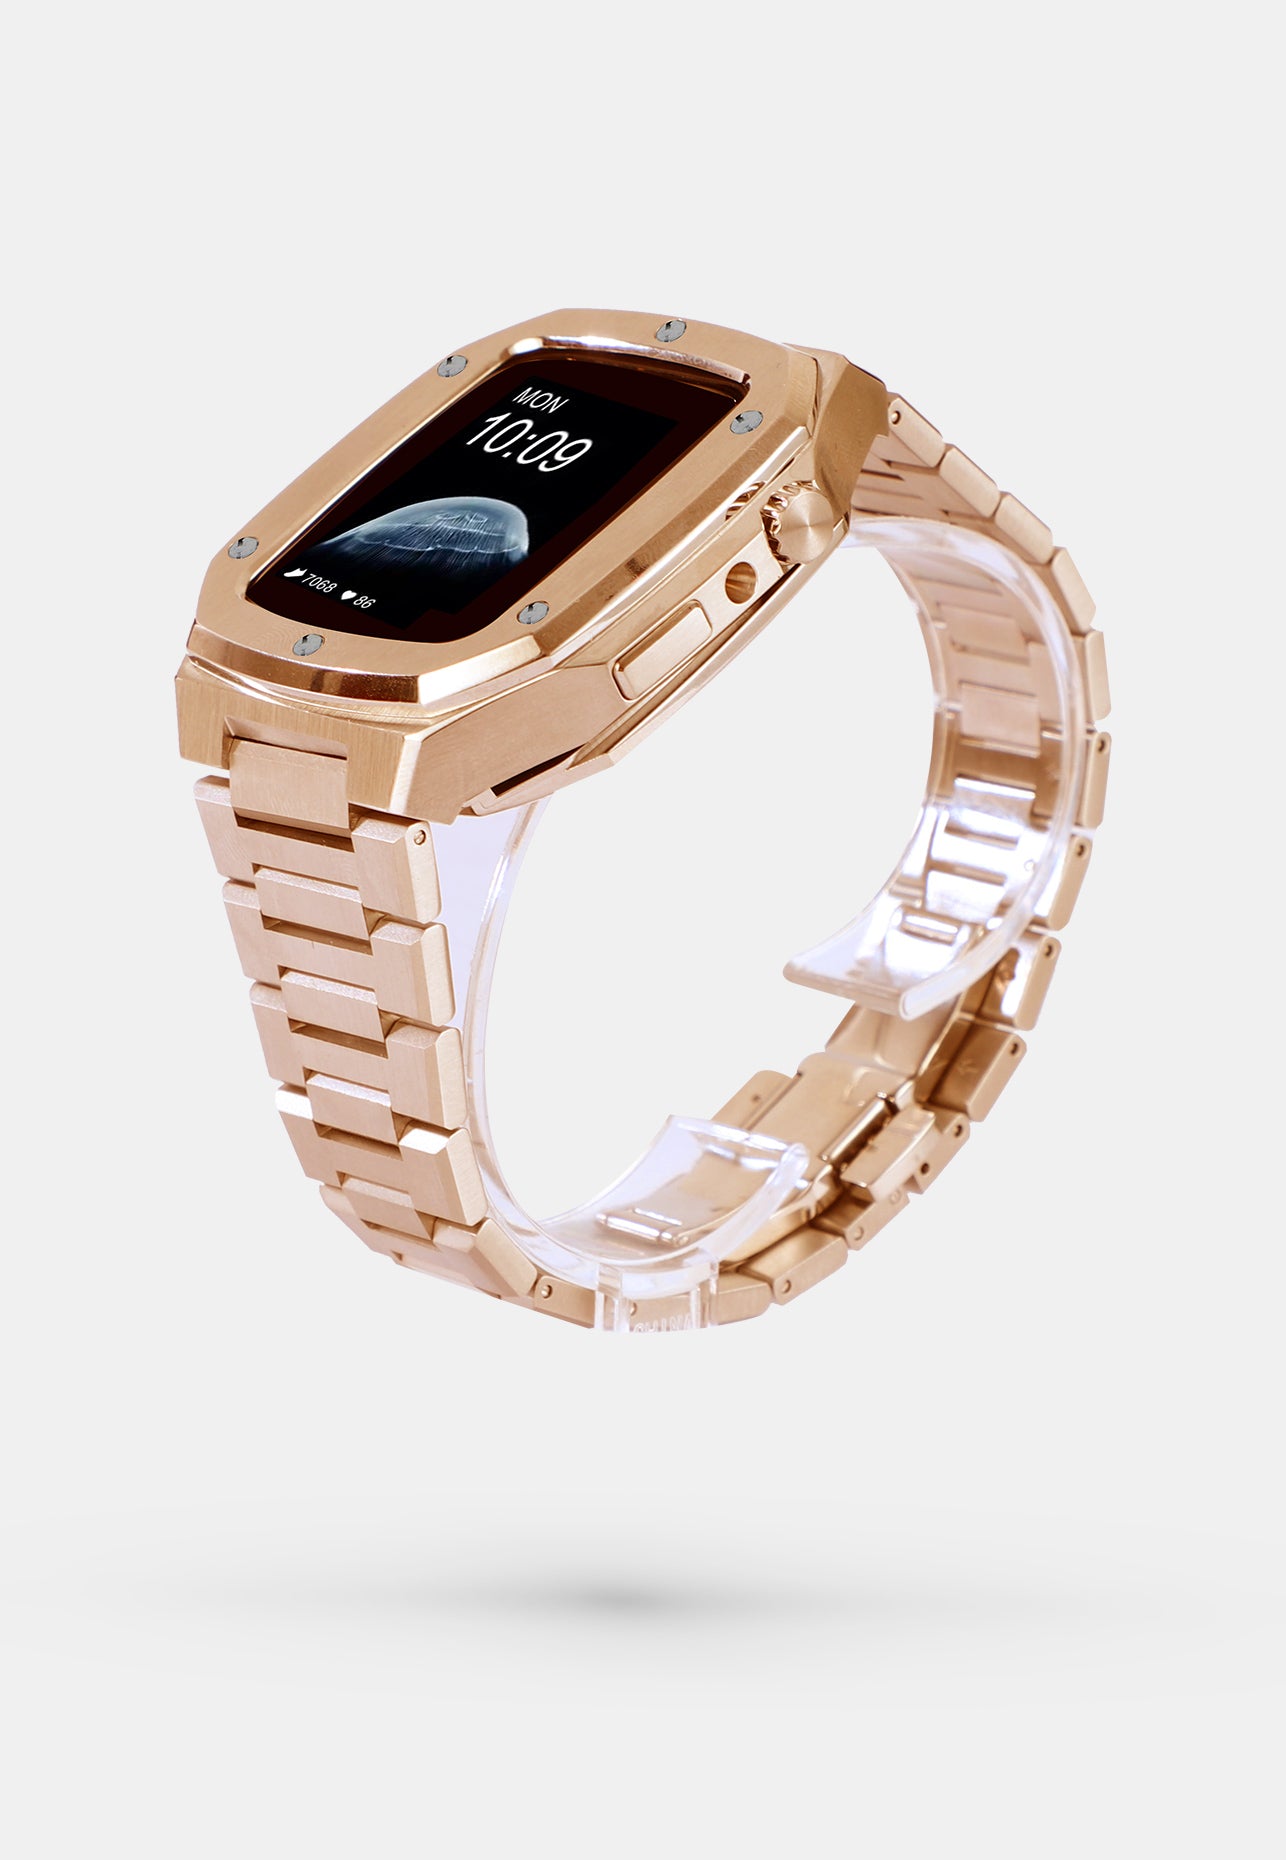 Everose Gold - Imperial OAK - Coque et bracelet Apple Watch - 44mm